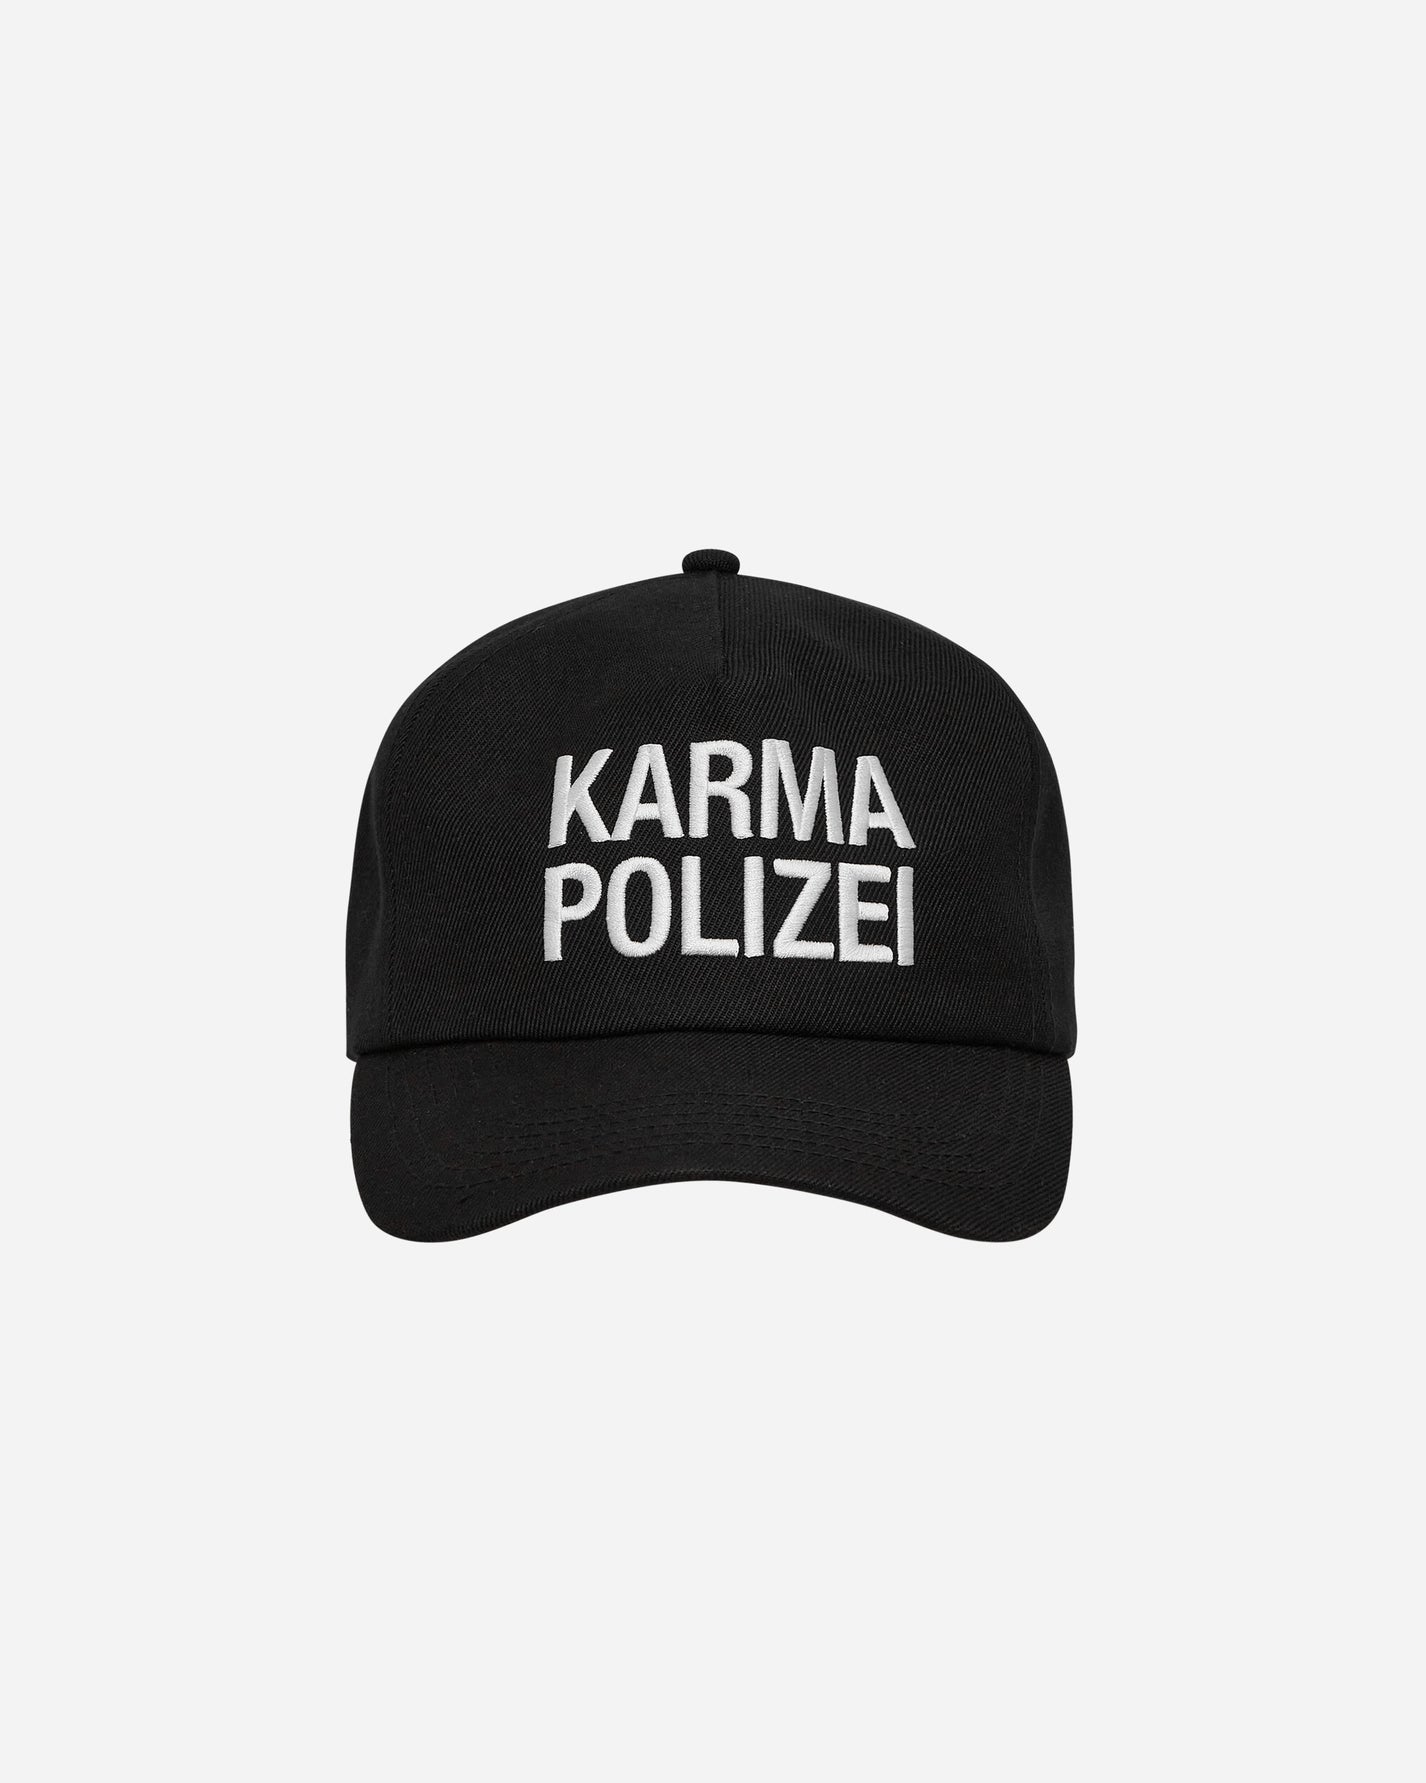 Pleasures Karma Snapback Black Hats Caps 9508028 BLACK